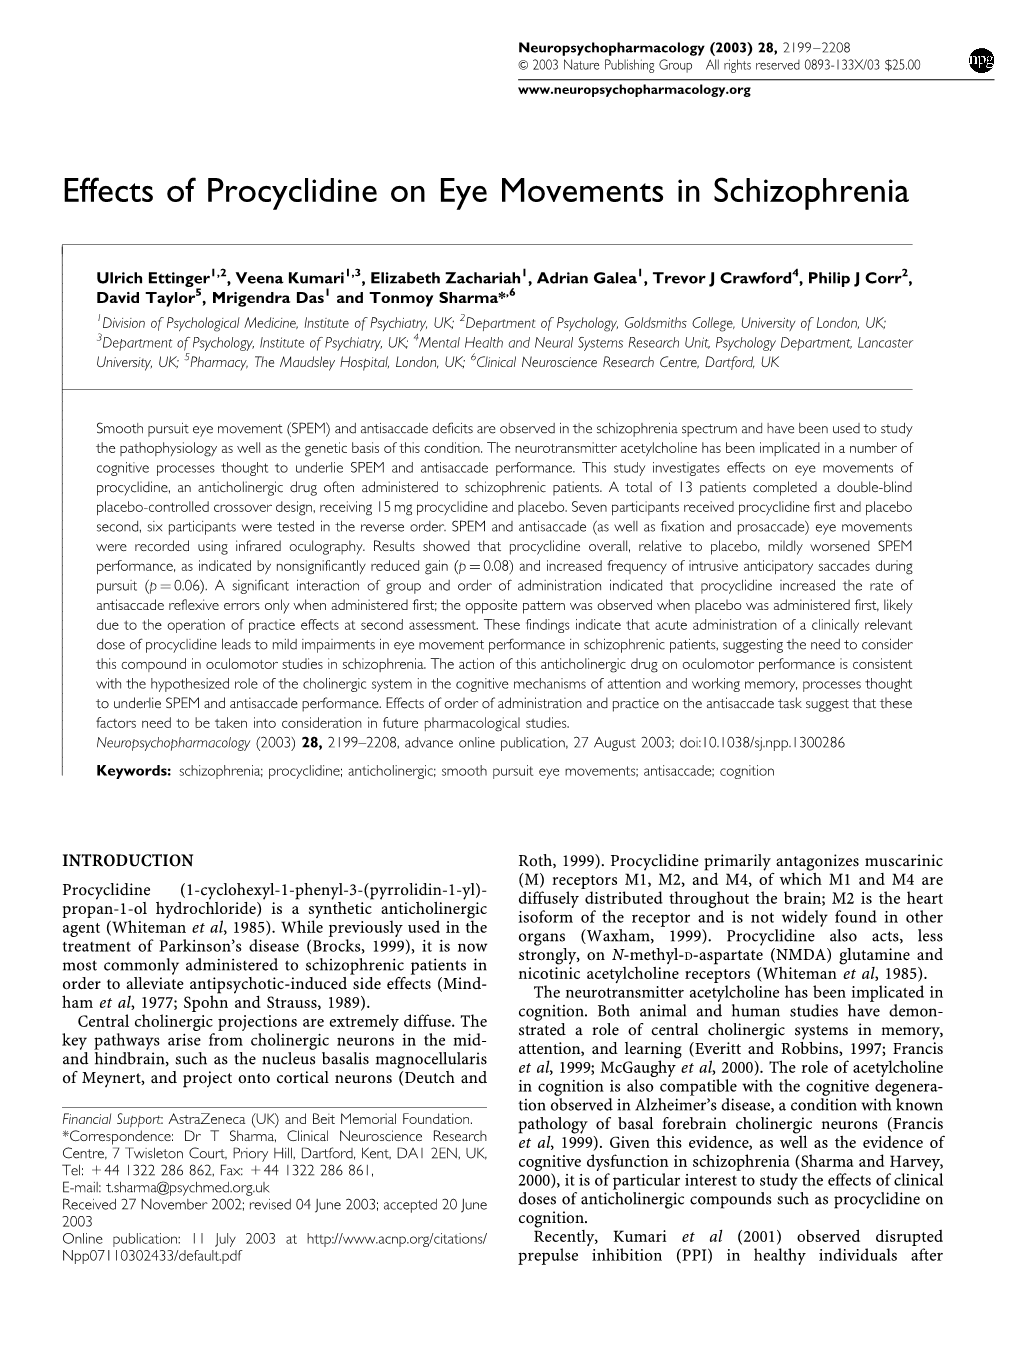 Effects of Procyclidine on Eye Movements in Schizophrenia